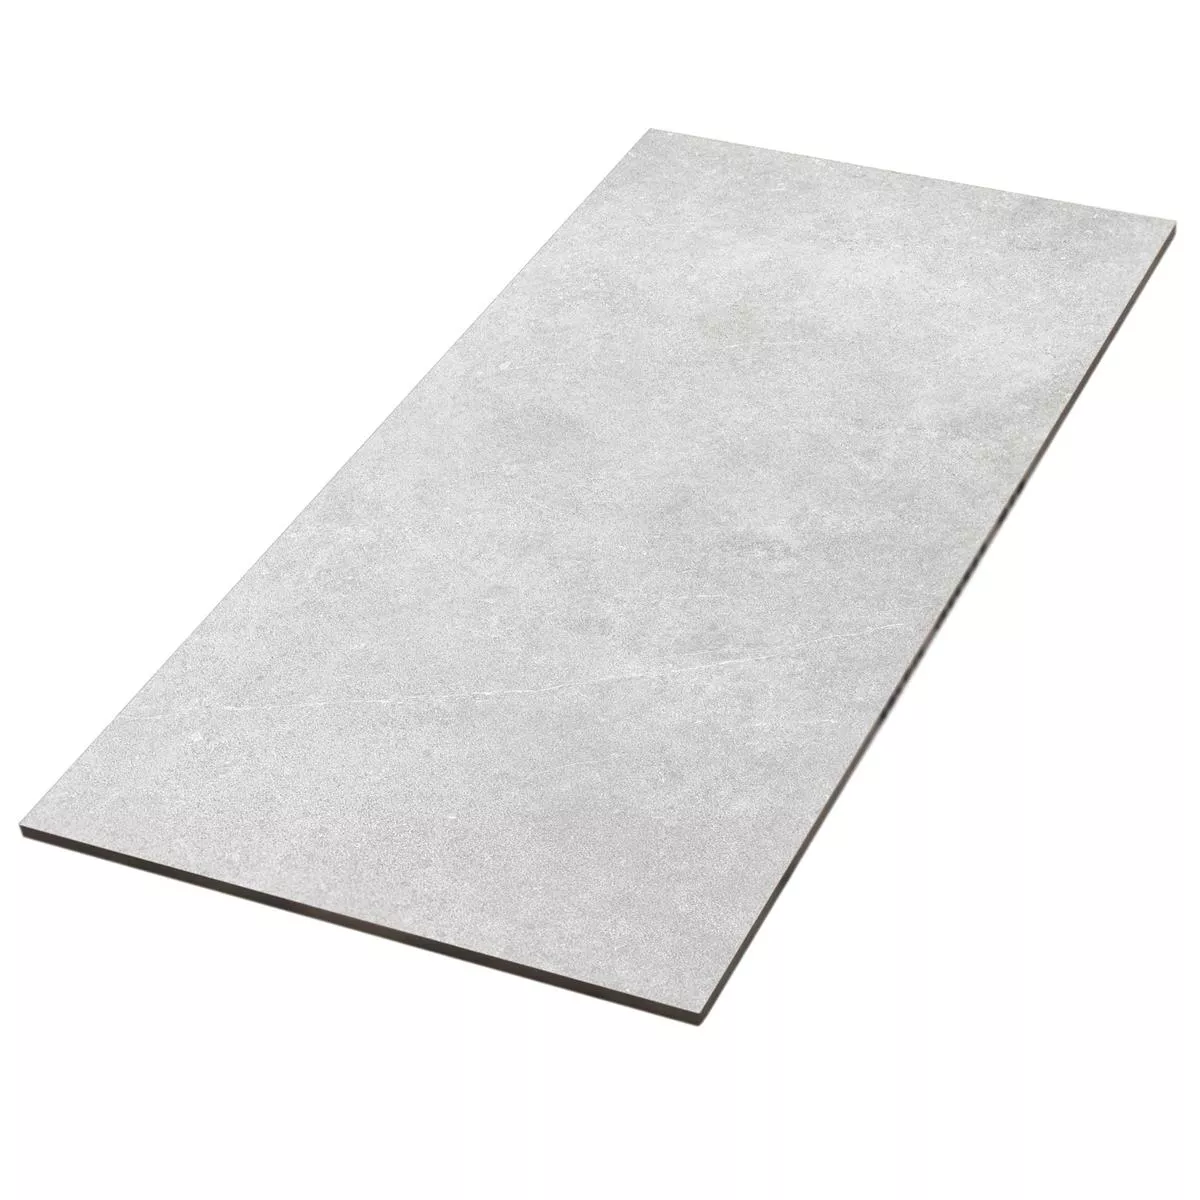 Sample Floor Tiles Montana Unglazed Light Grey 30x60cm / R10B